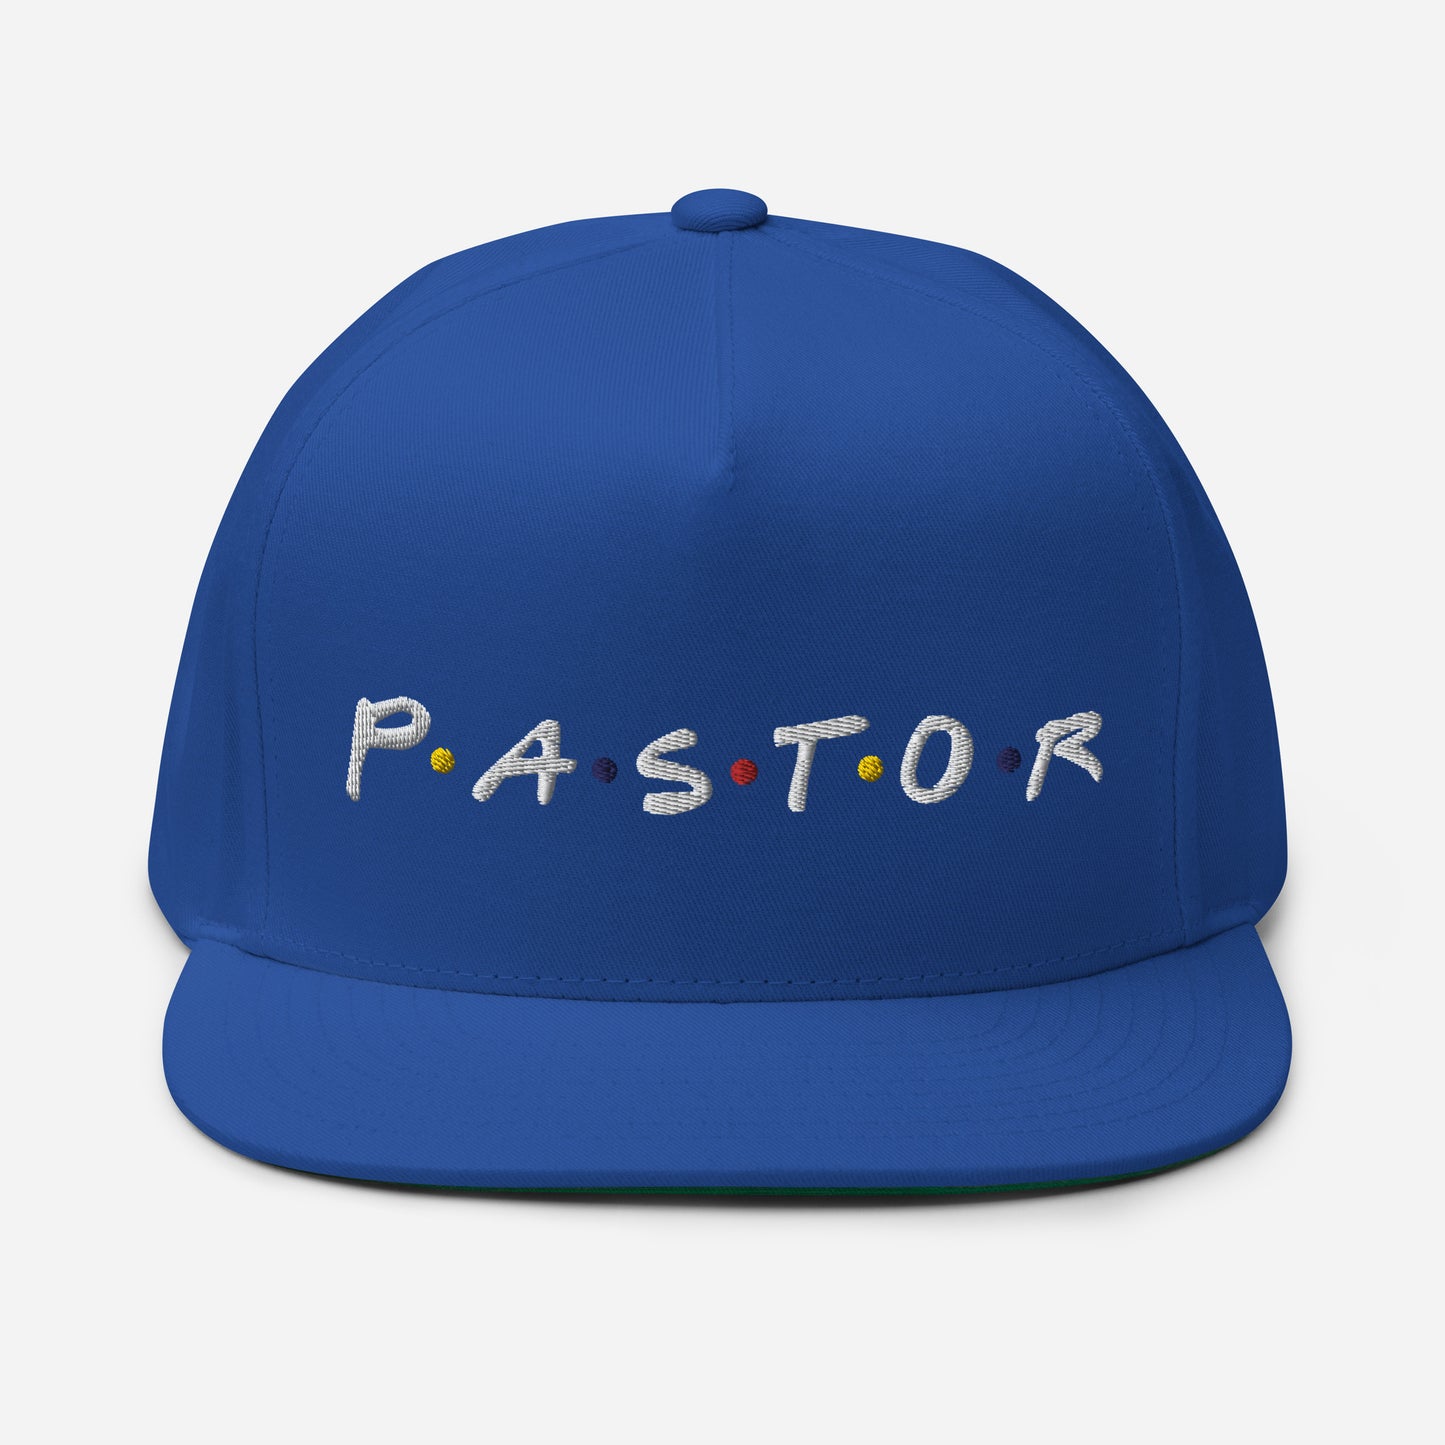 Pastor Flat Bill Cap